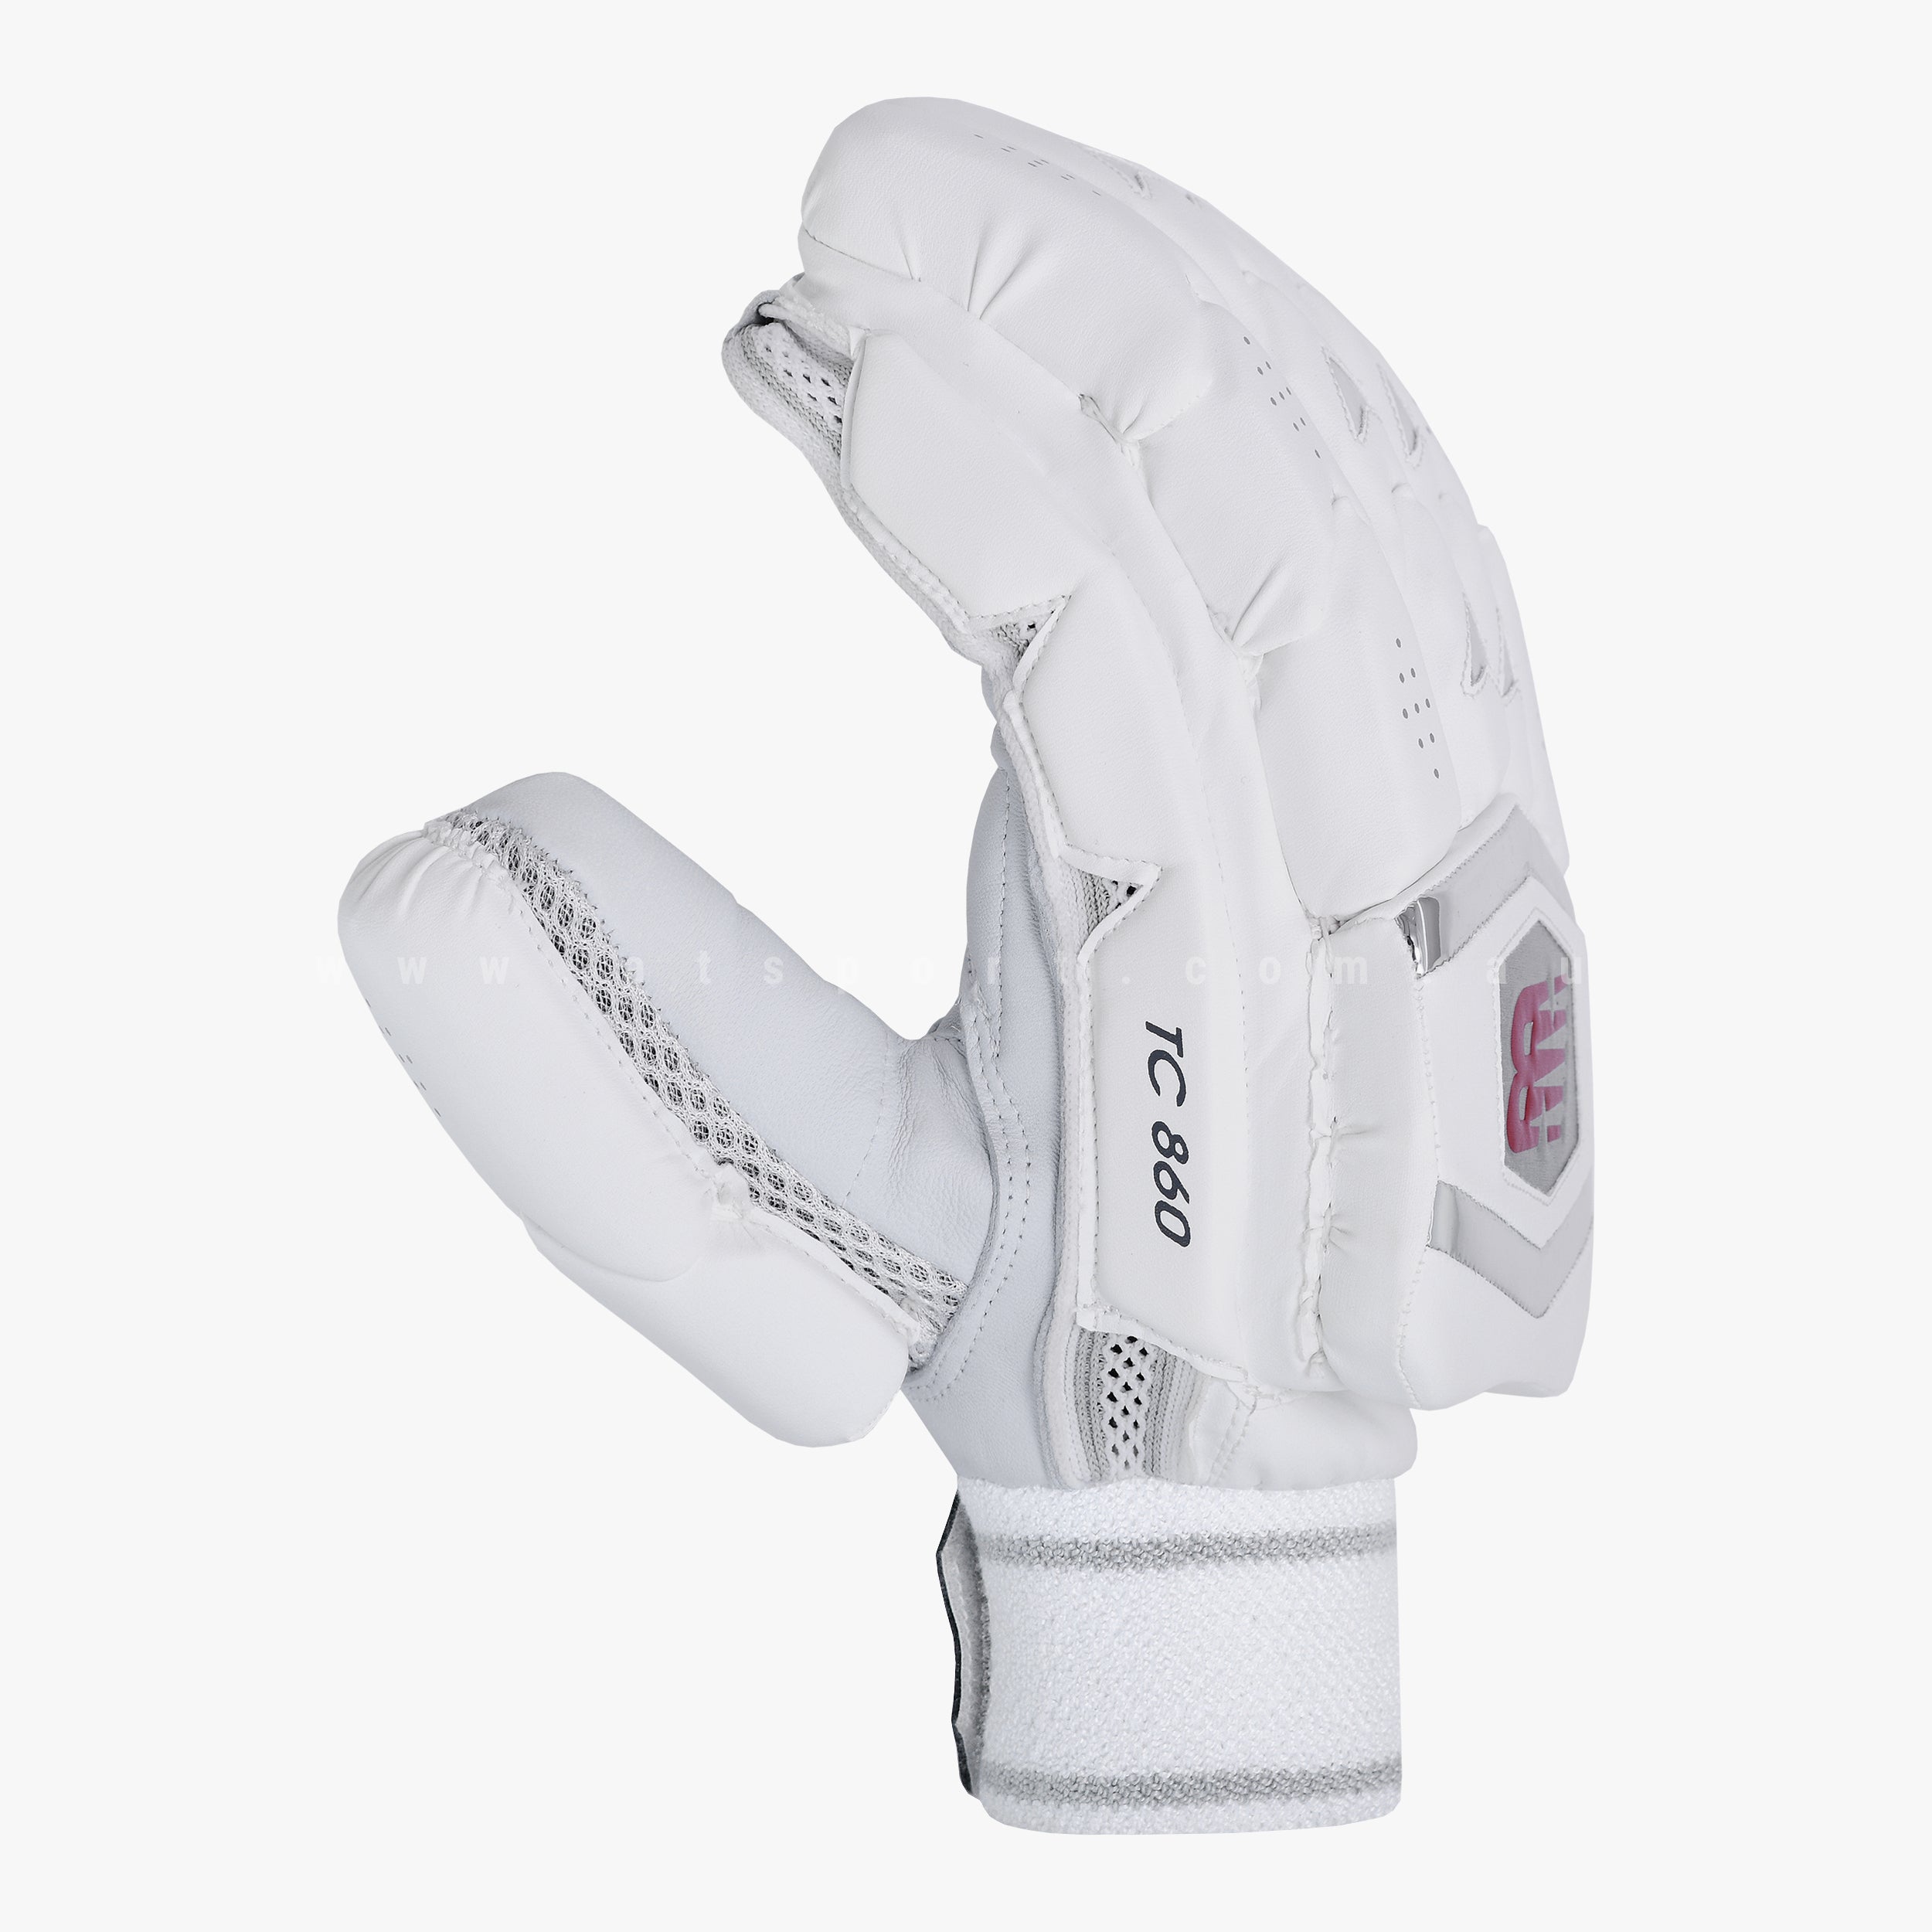 New Balance TC 860 2023 Cricket Batting Gloves - ADULT